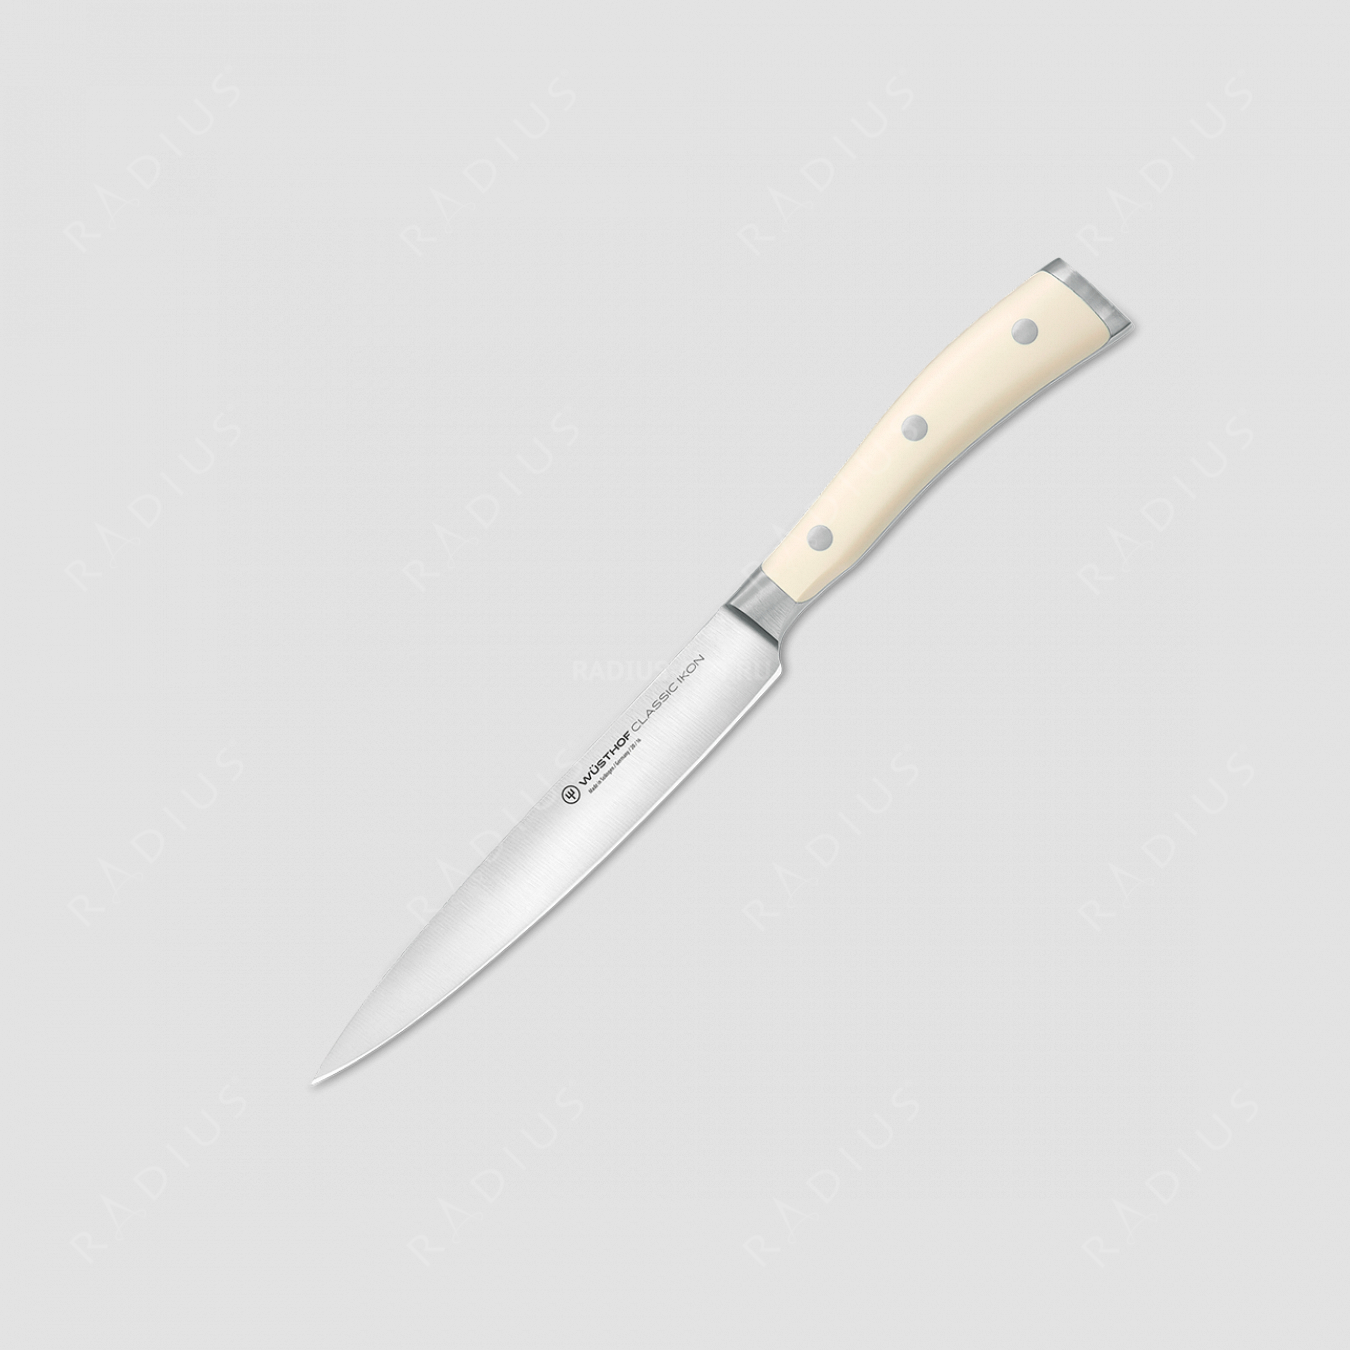 Нож кухонный для нарезки 16 см, серия Ikon Cream White, WUESTHOF, Золинген, Германия